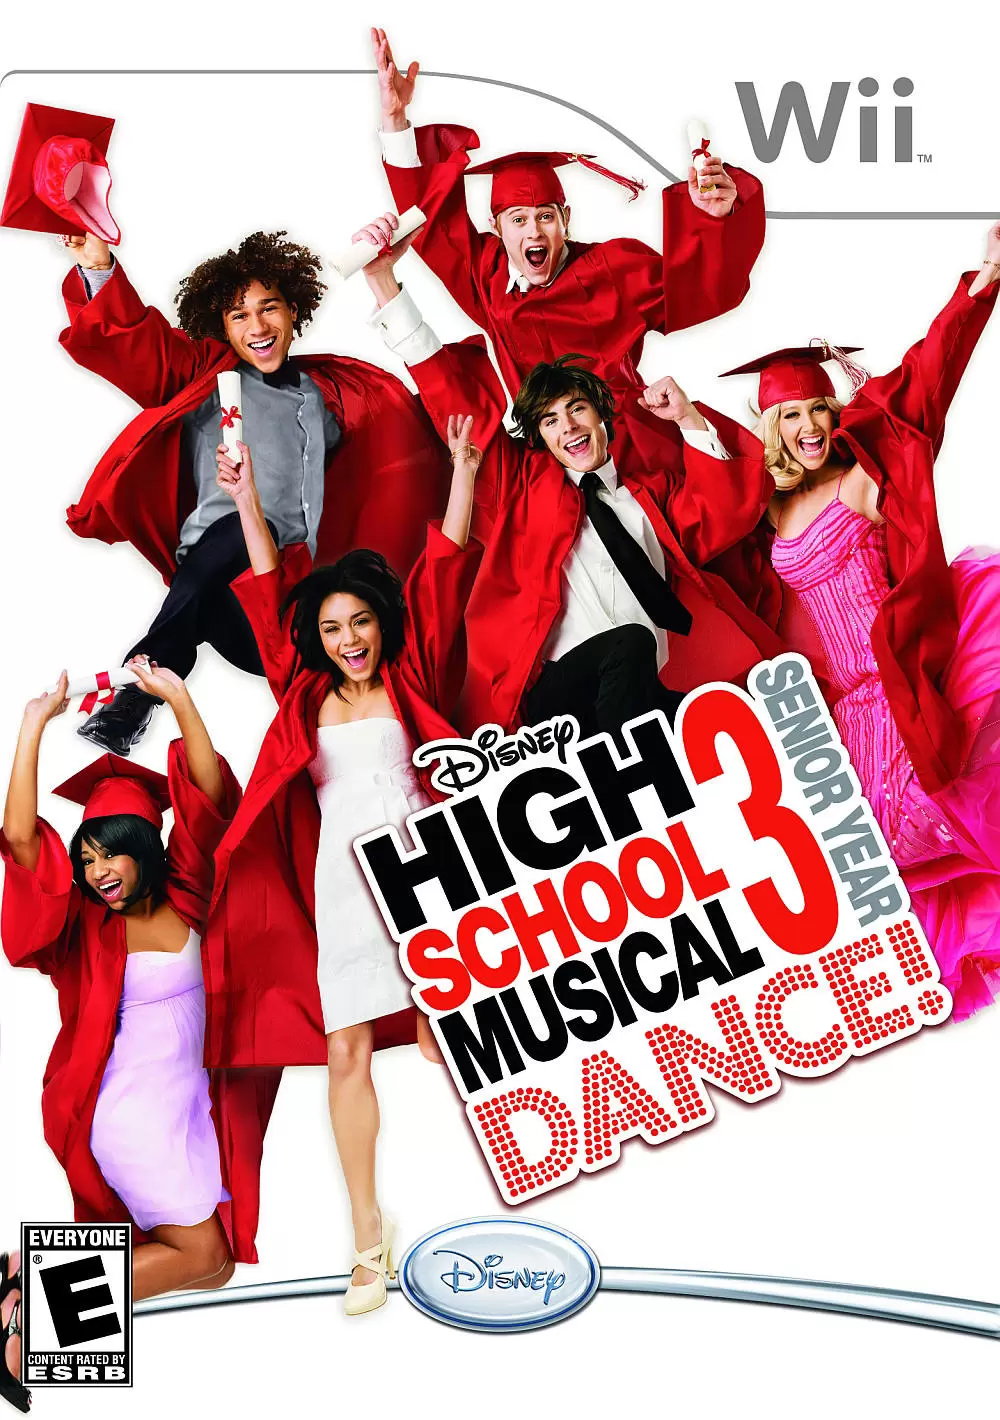 Nintendo Wii Games - High School Musical 3: Senior Year Dance!